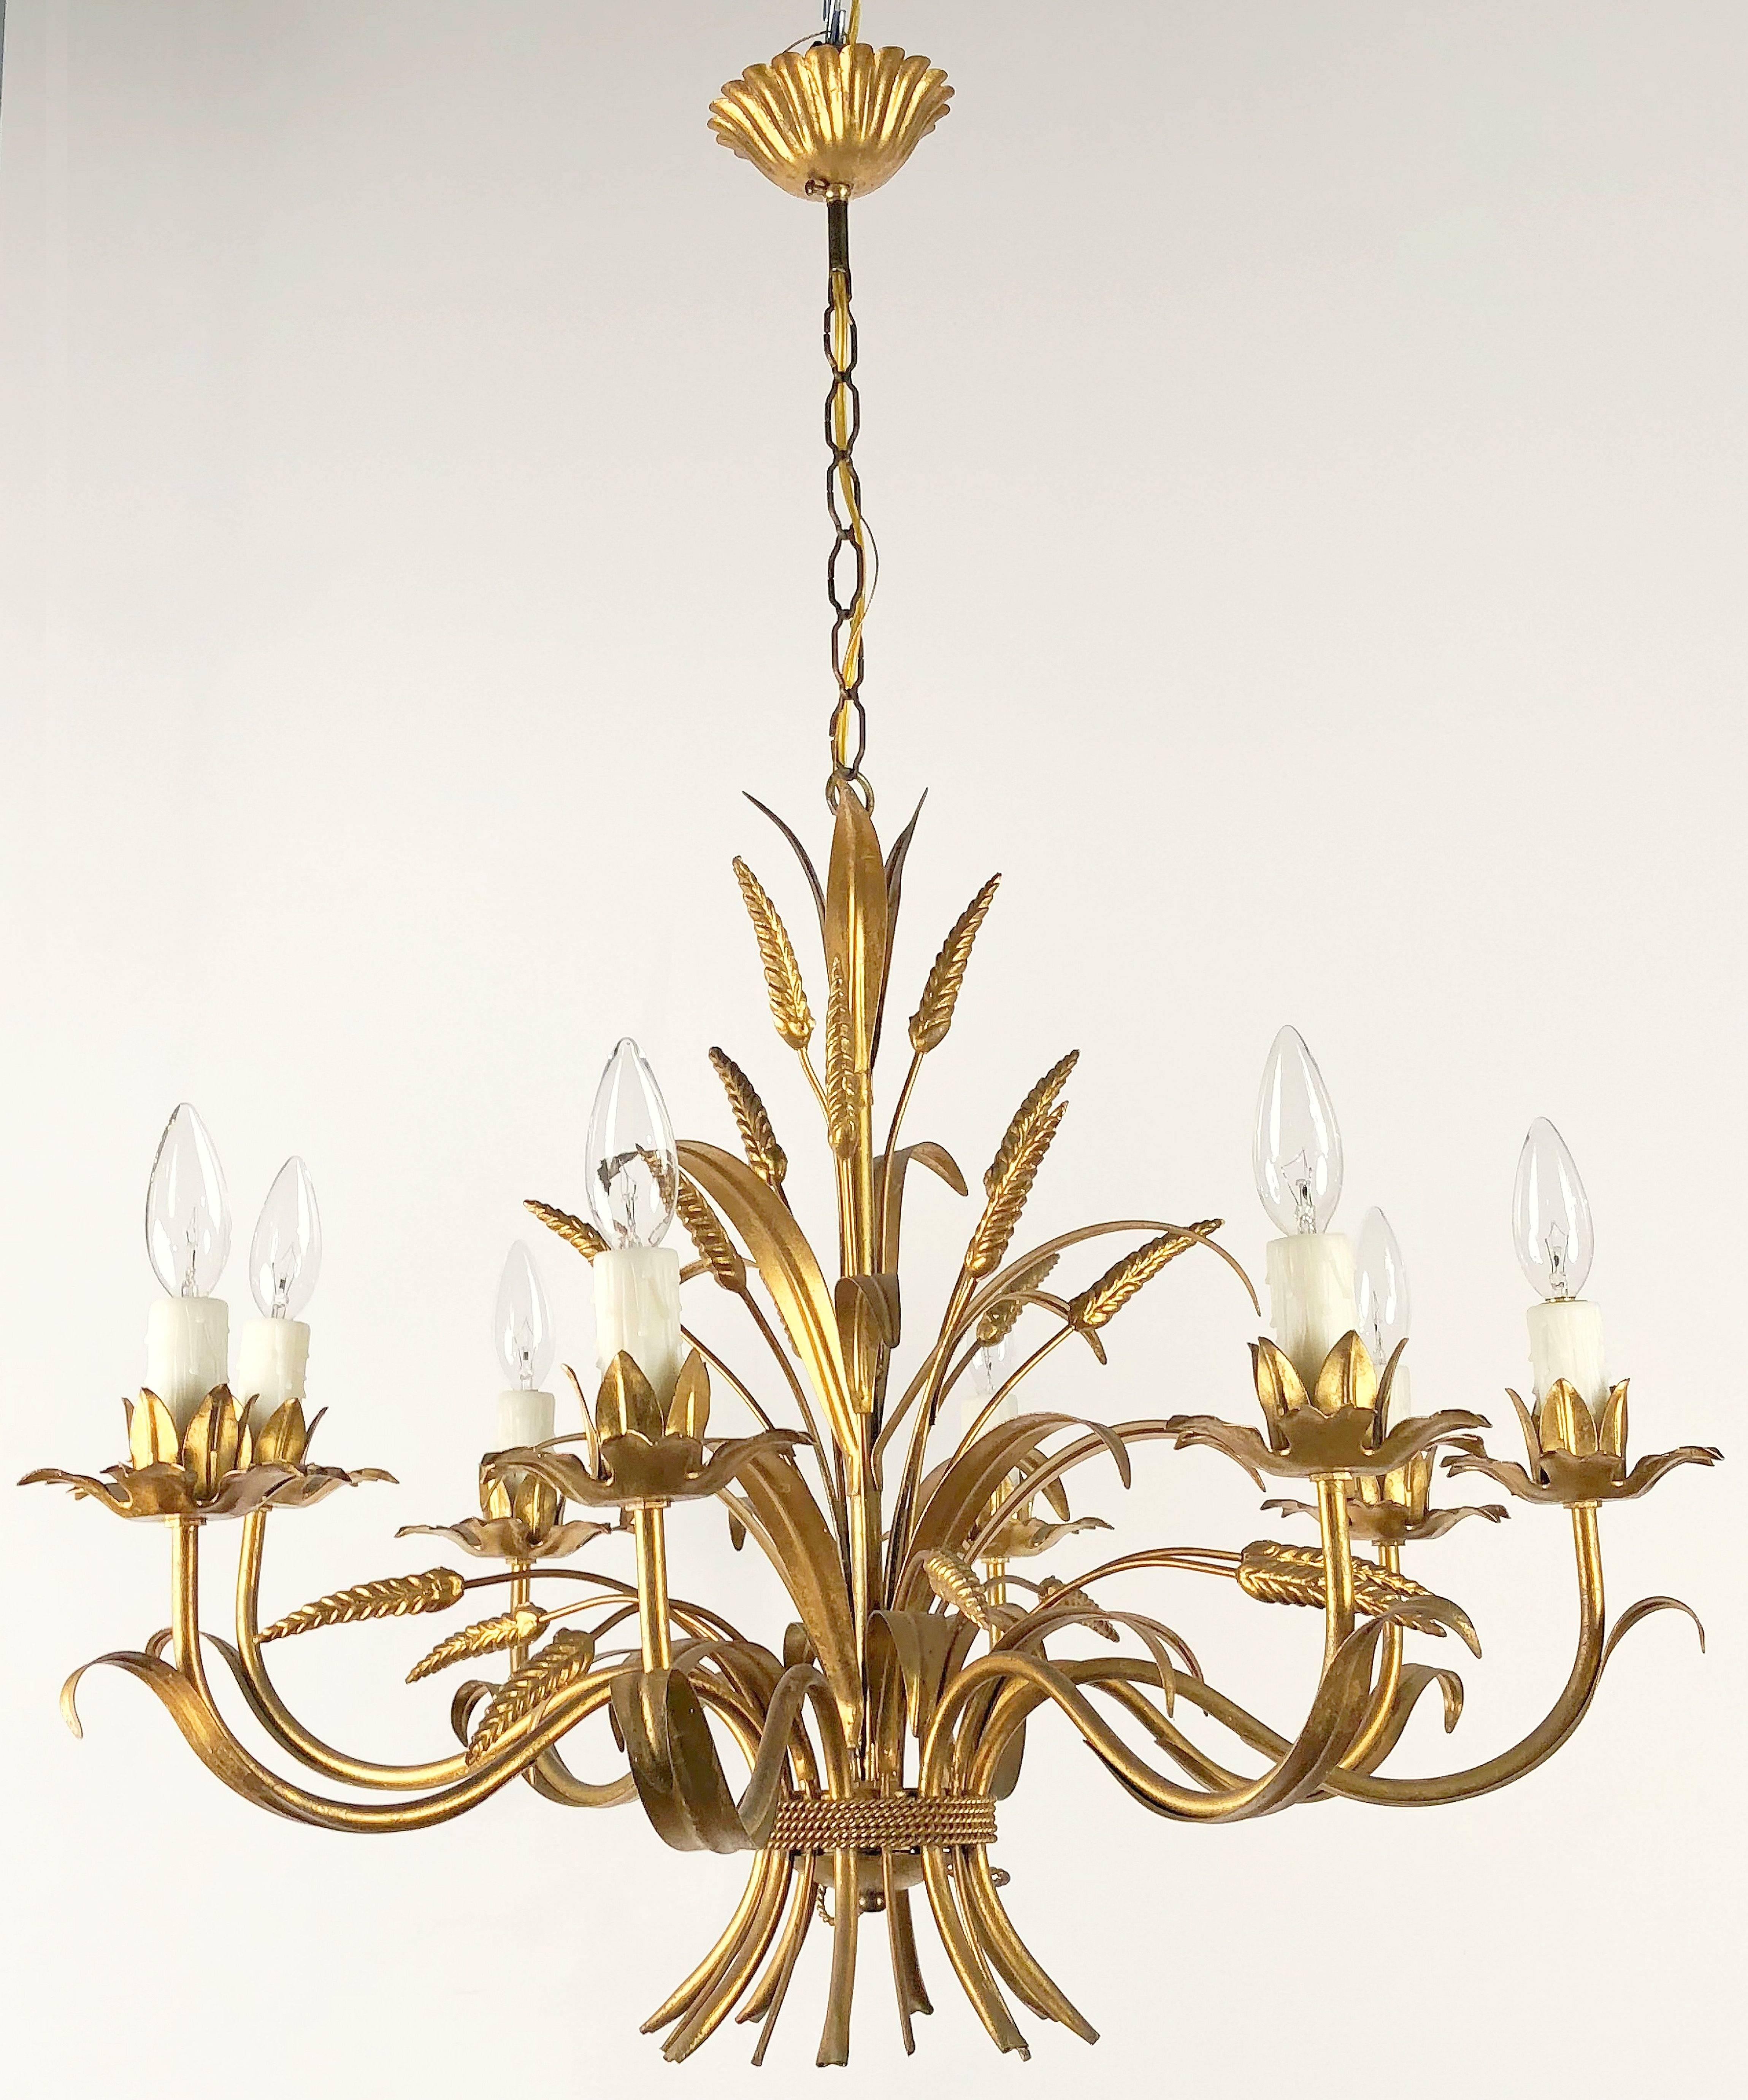 A handsome Italian eight-light hanging light fixture or chandelier (28